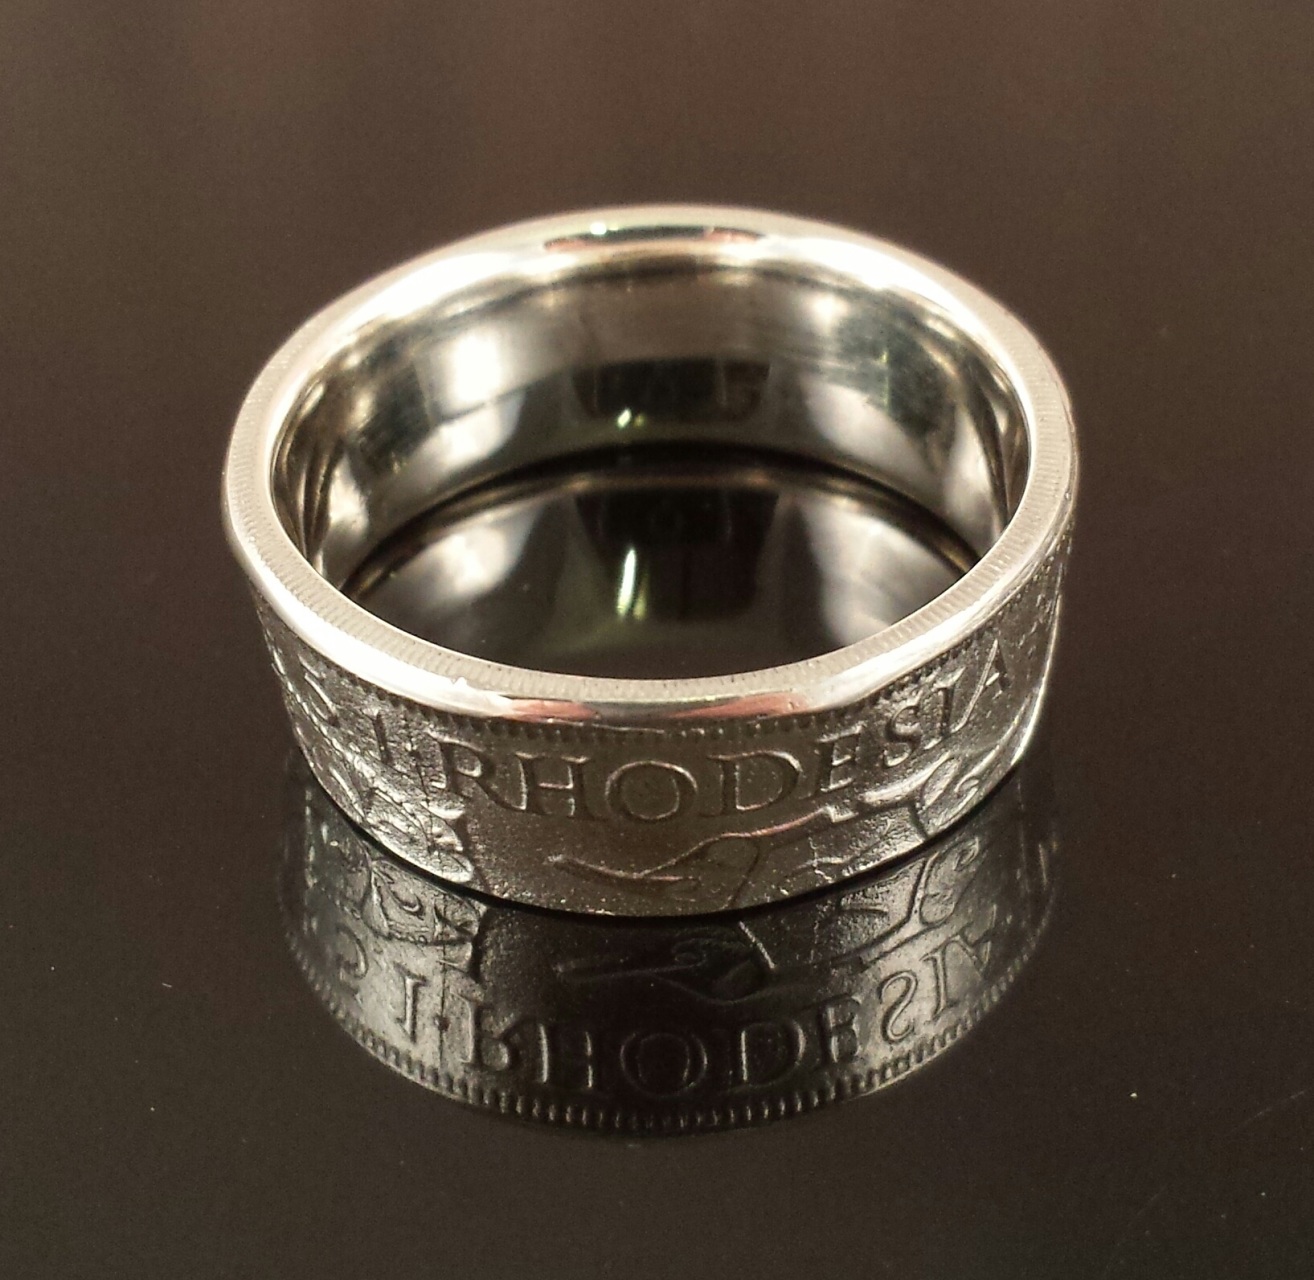 Rhodie Rings - jewellery and lapidary specialists - Rhodie Rings